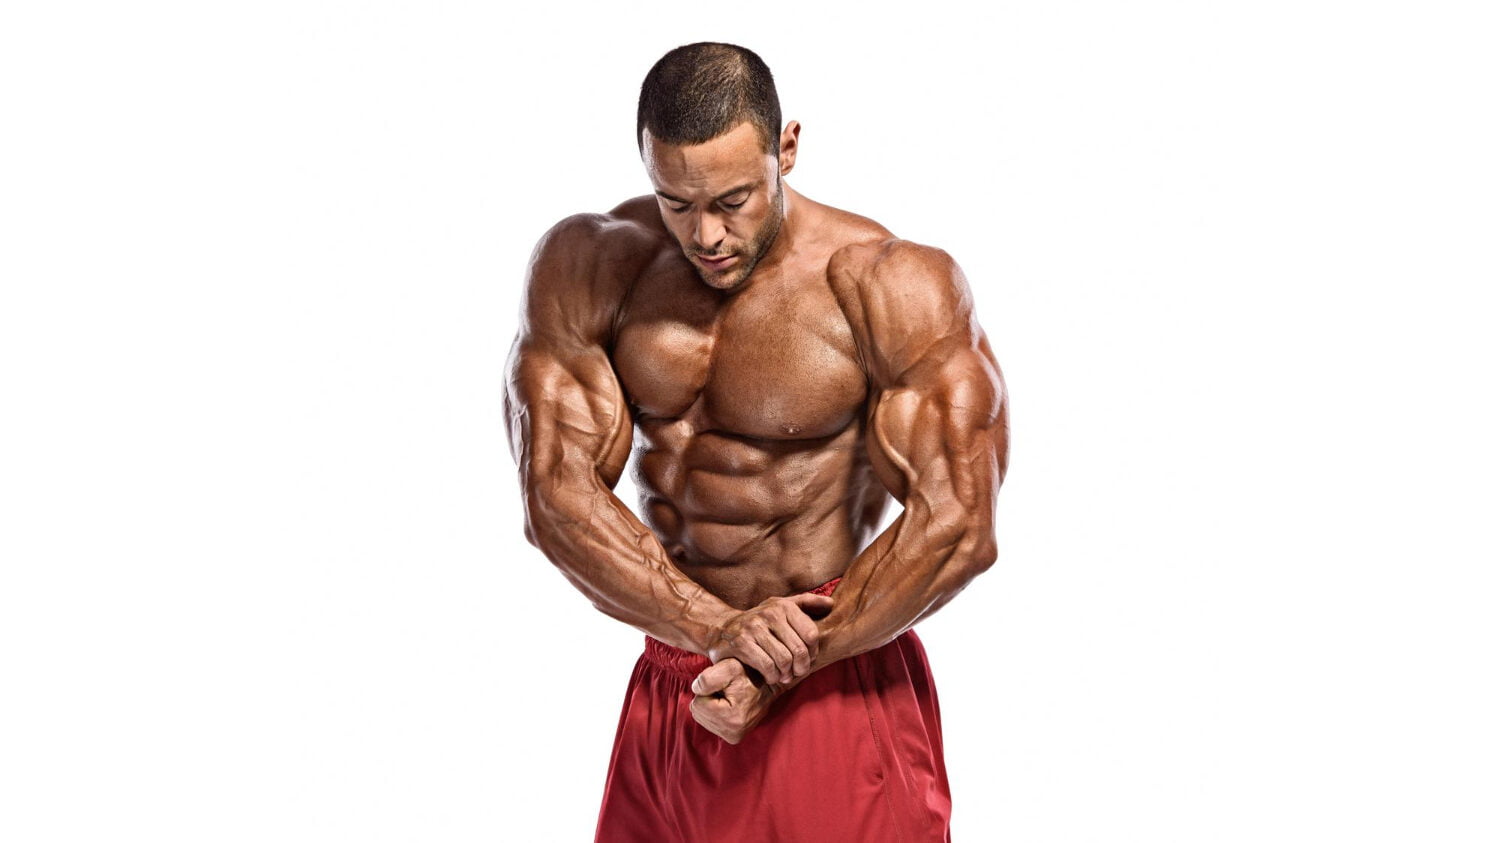 Body Builder Flexing Muscles